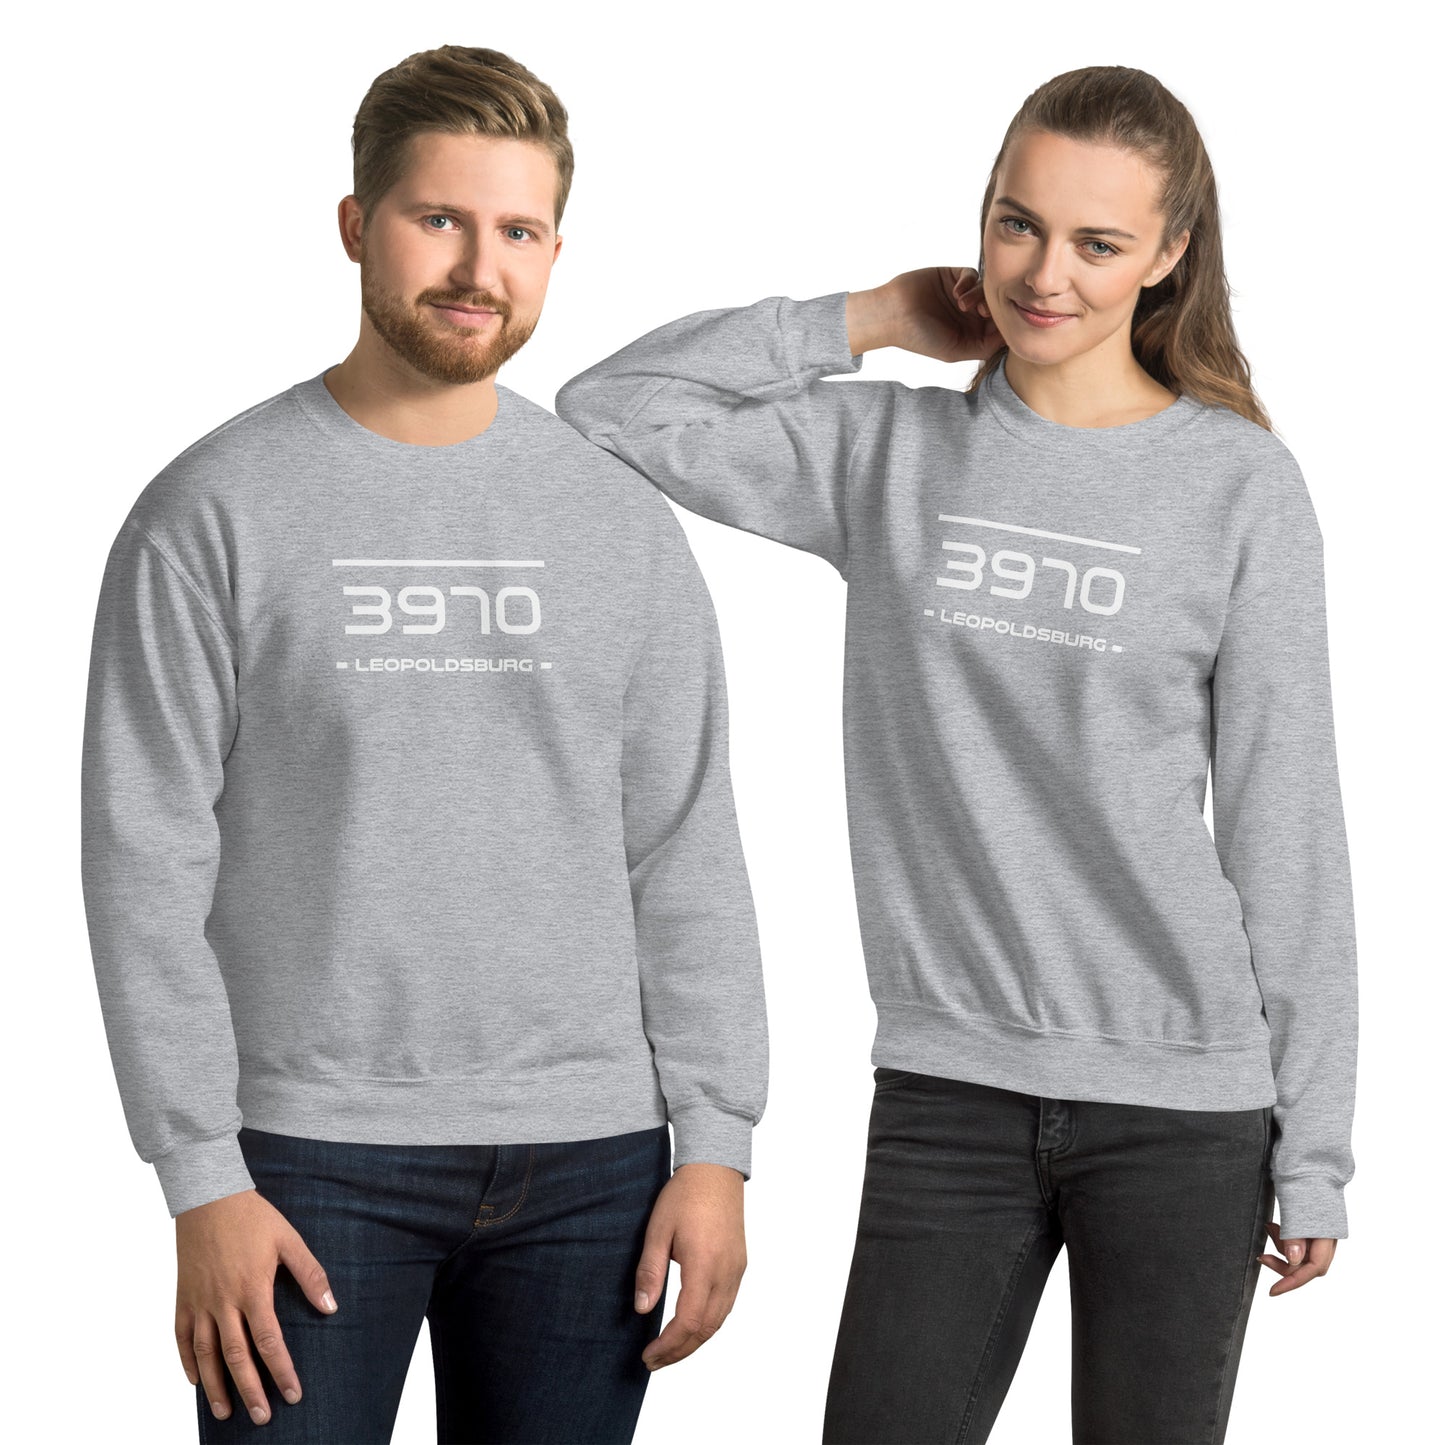 Sweater - 3970 - Leopoldsburg (M/V)